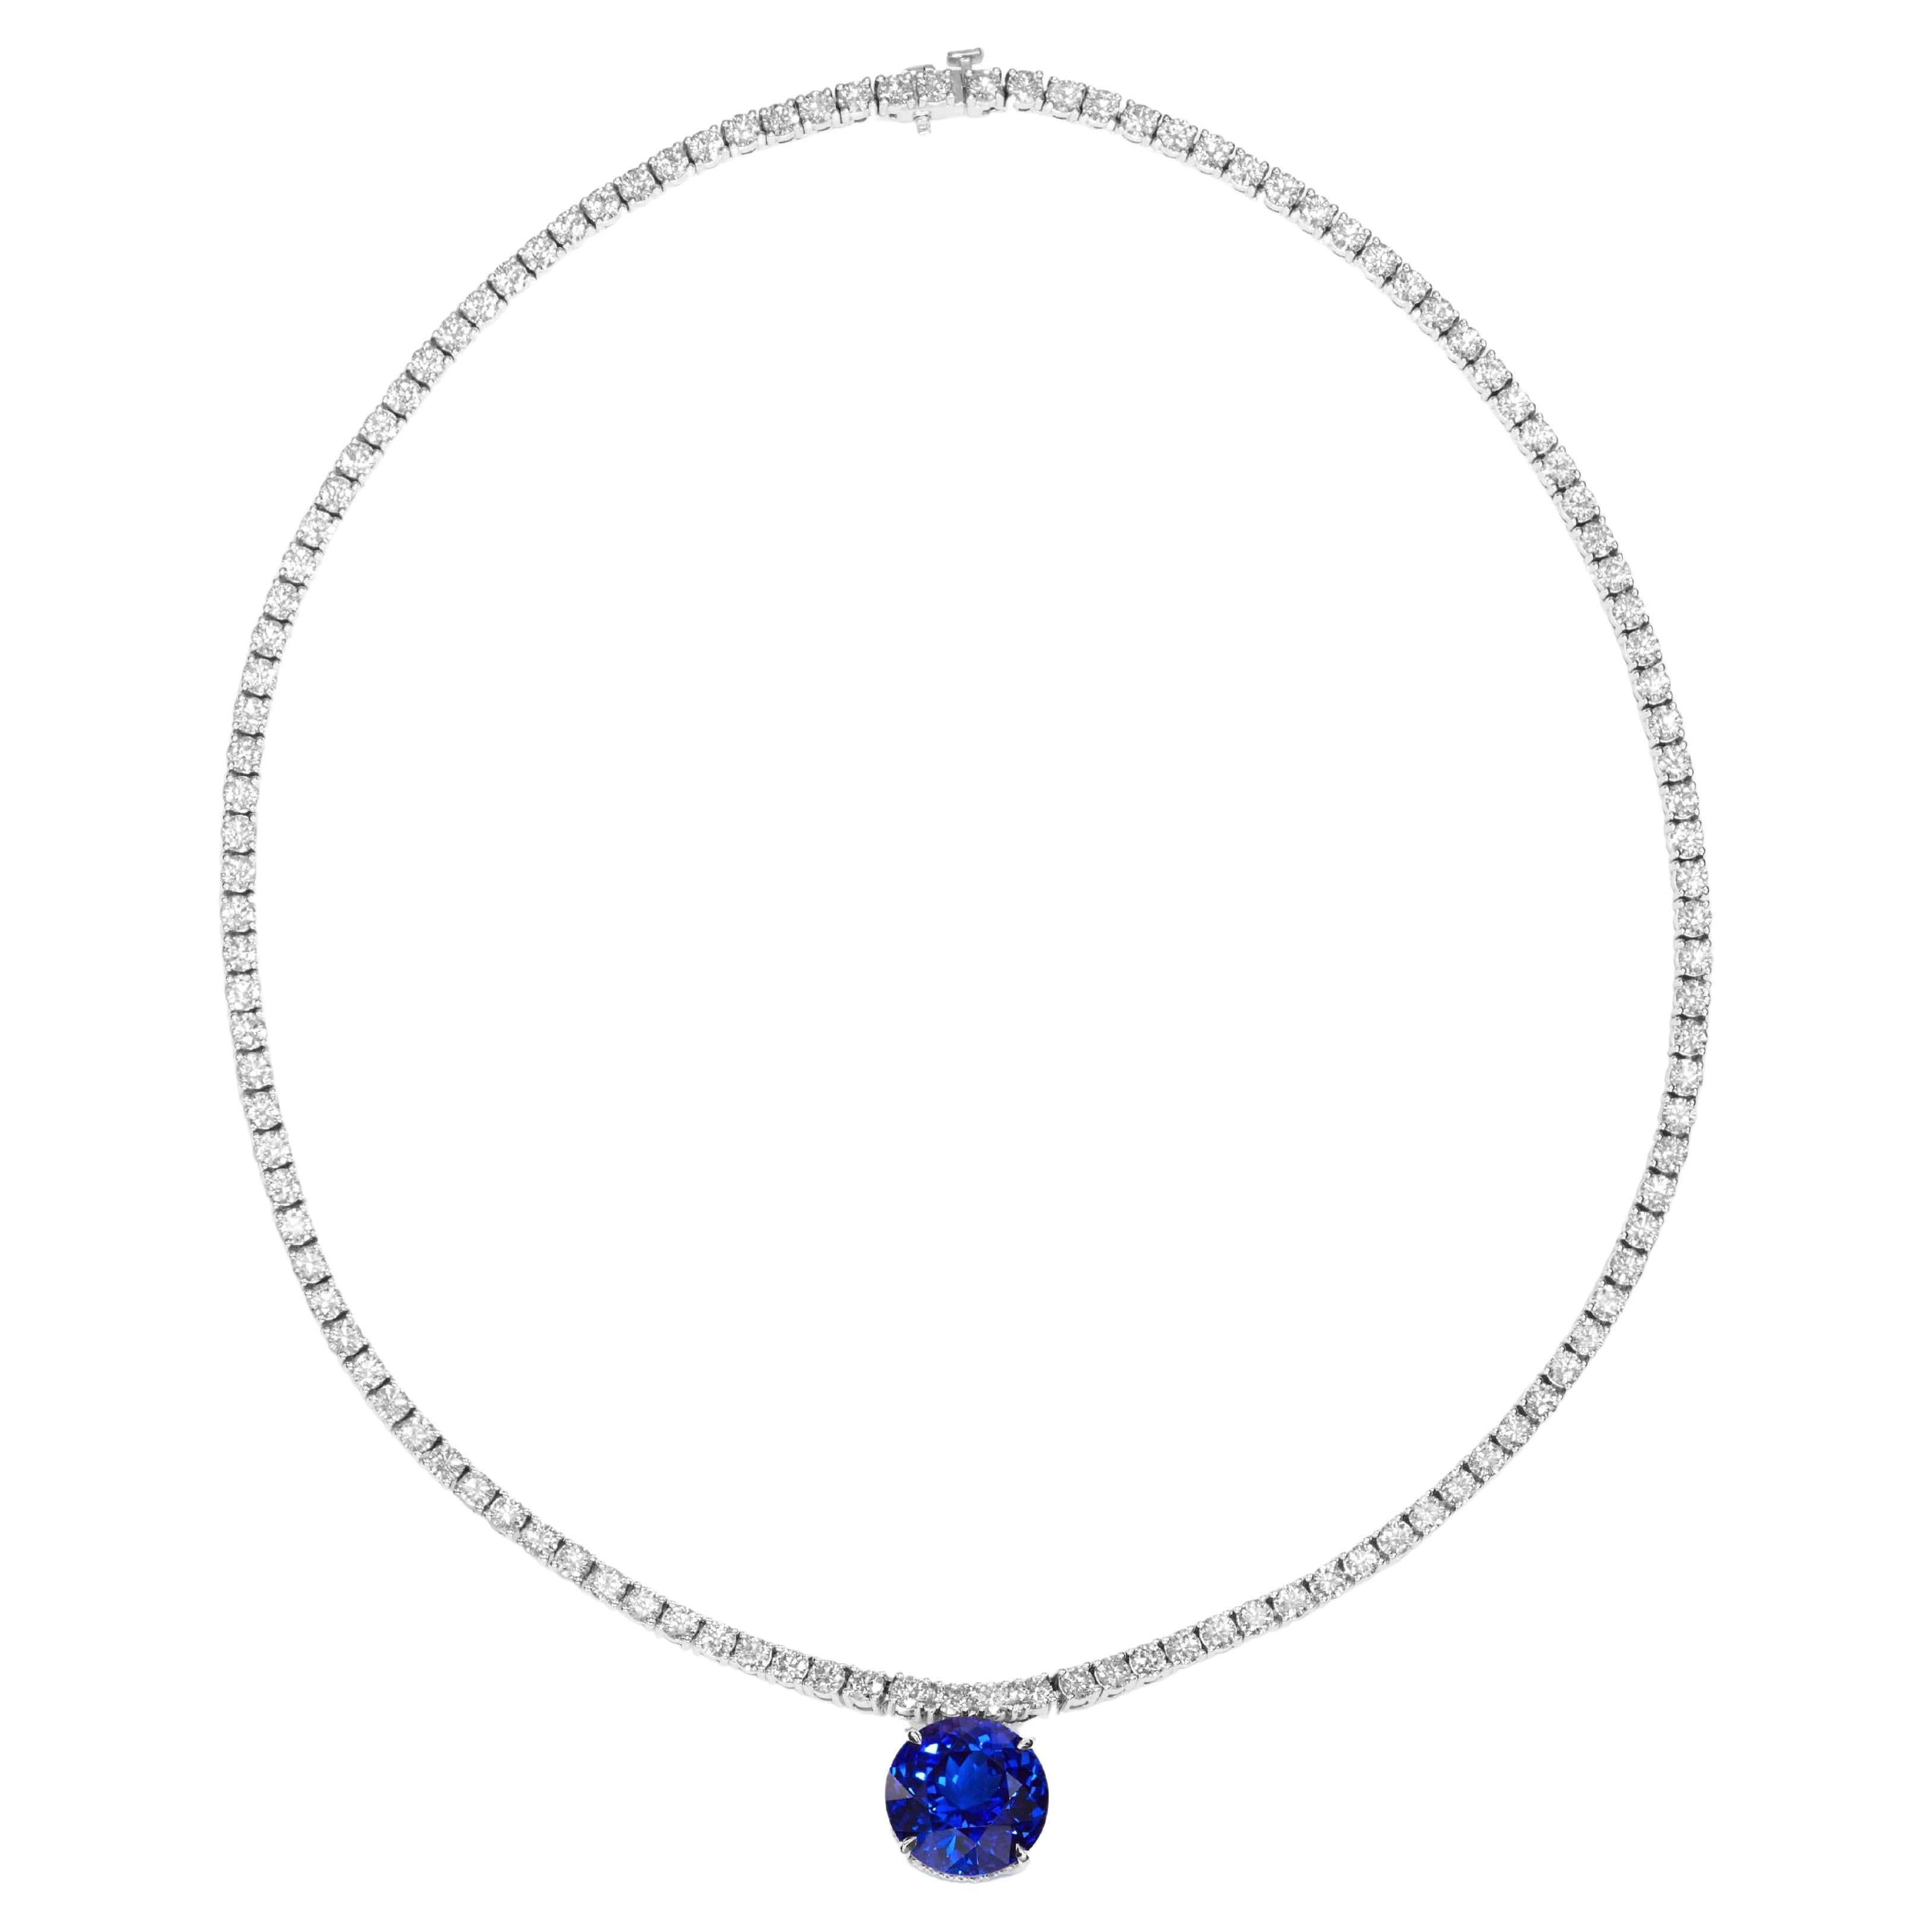 Diamond Tennis Necklace with Detachable 12.01 Carat Tanzanite Pendant